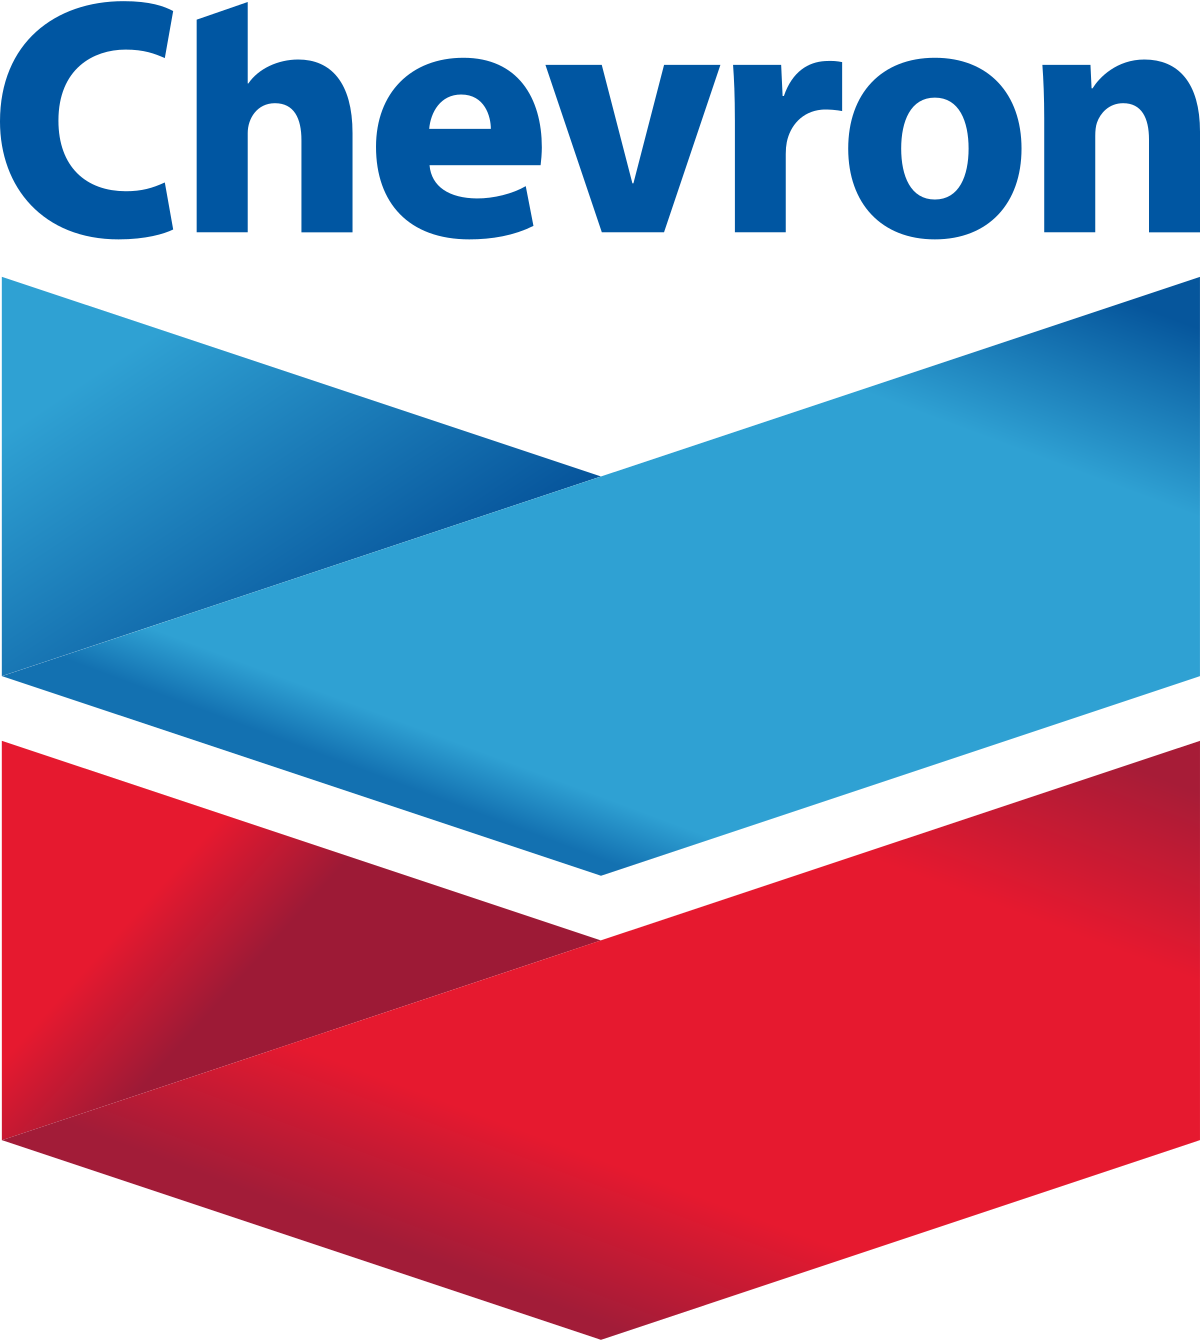 Chevron Nigeria Limited is taking precautions against the spread of COVID-19 virus